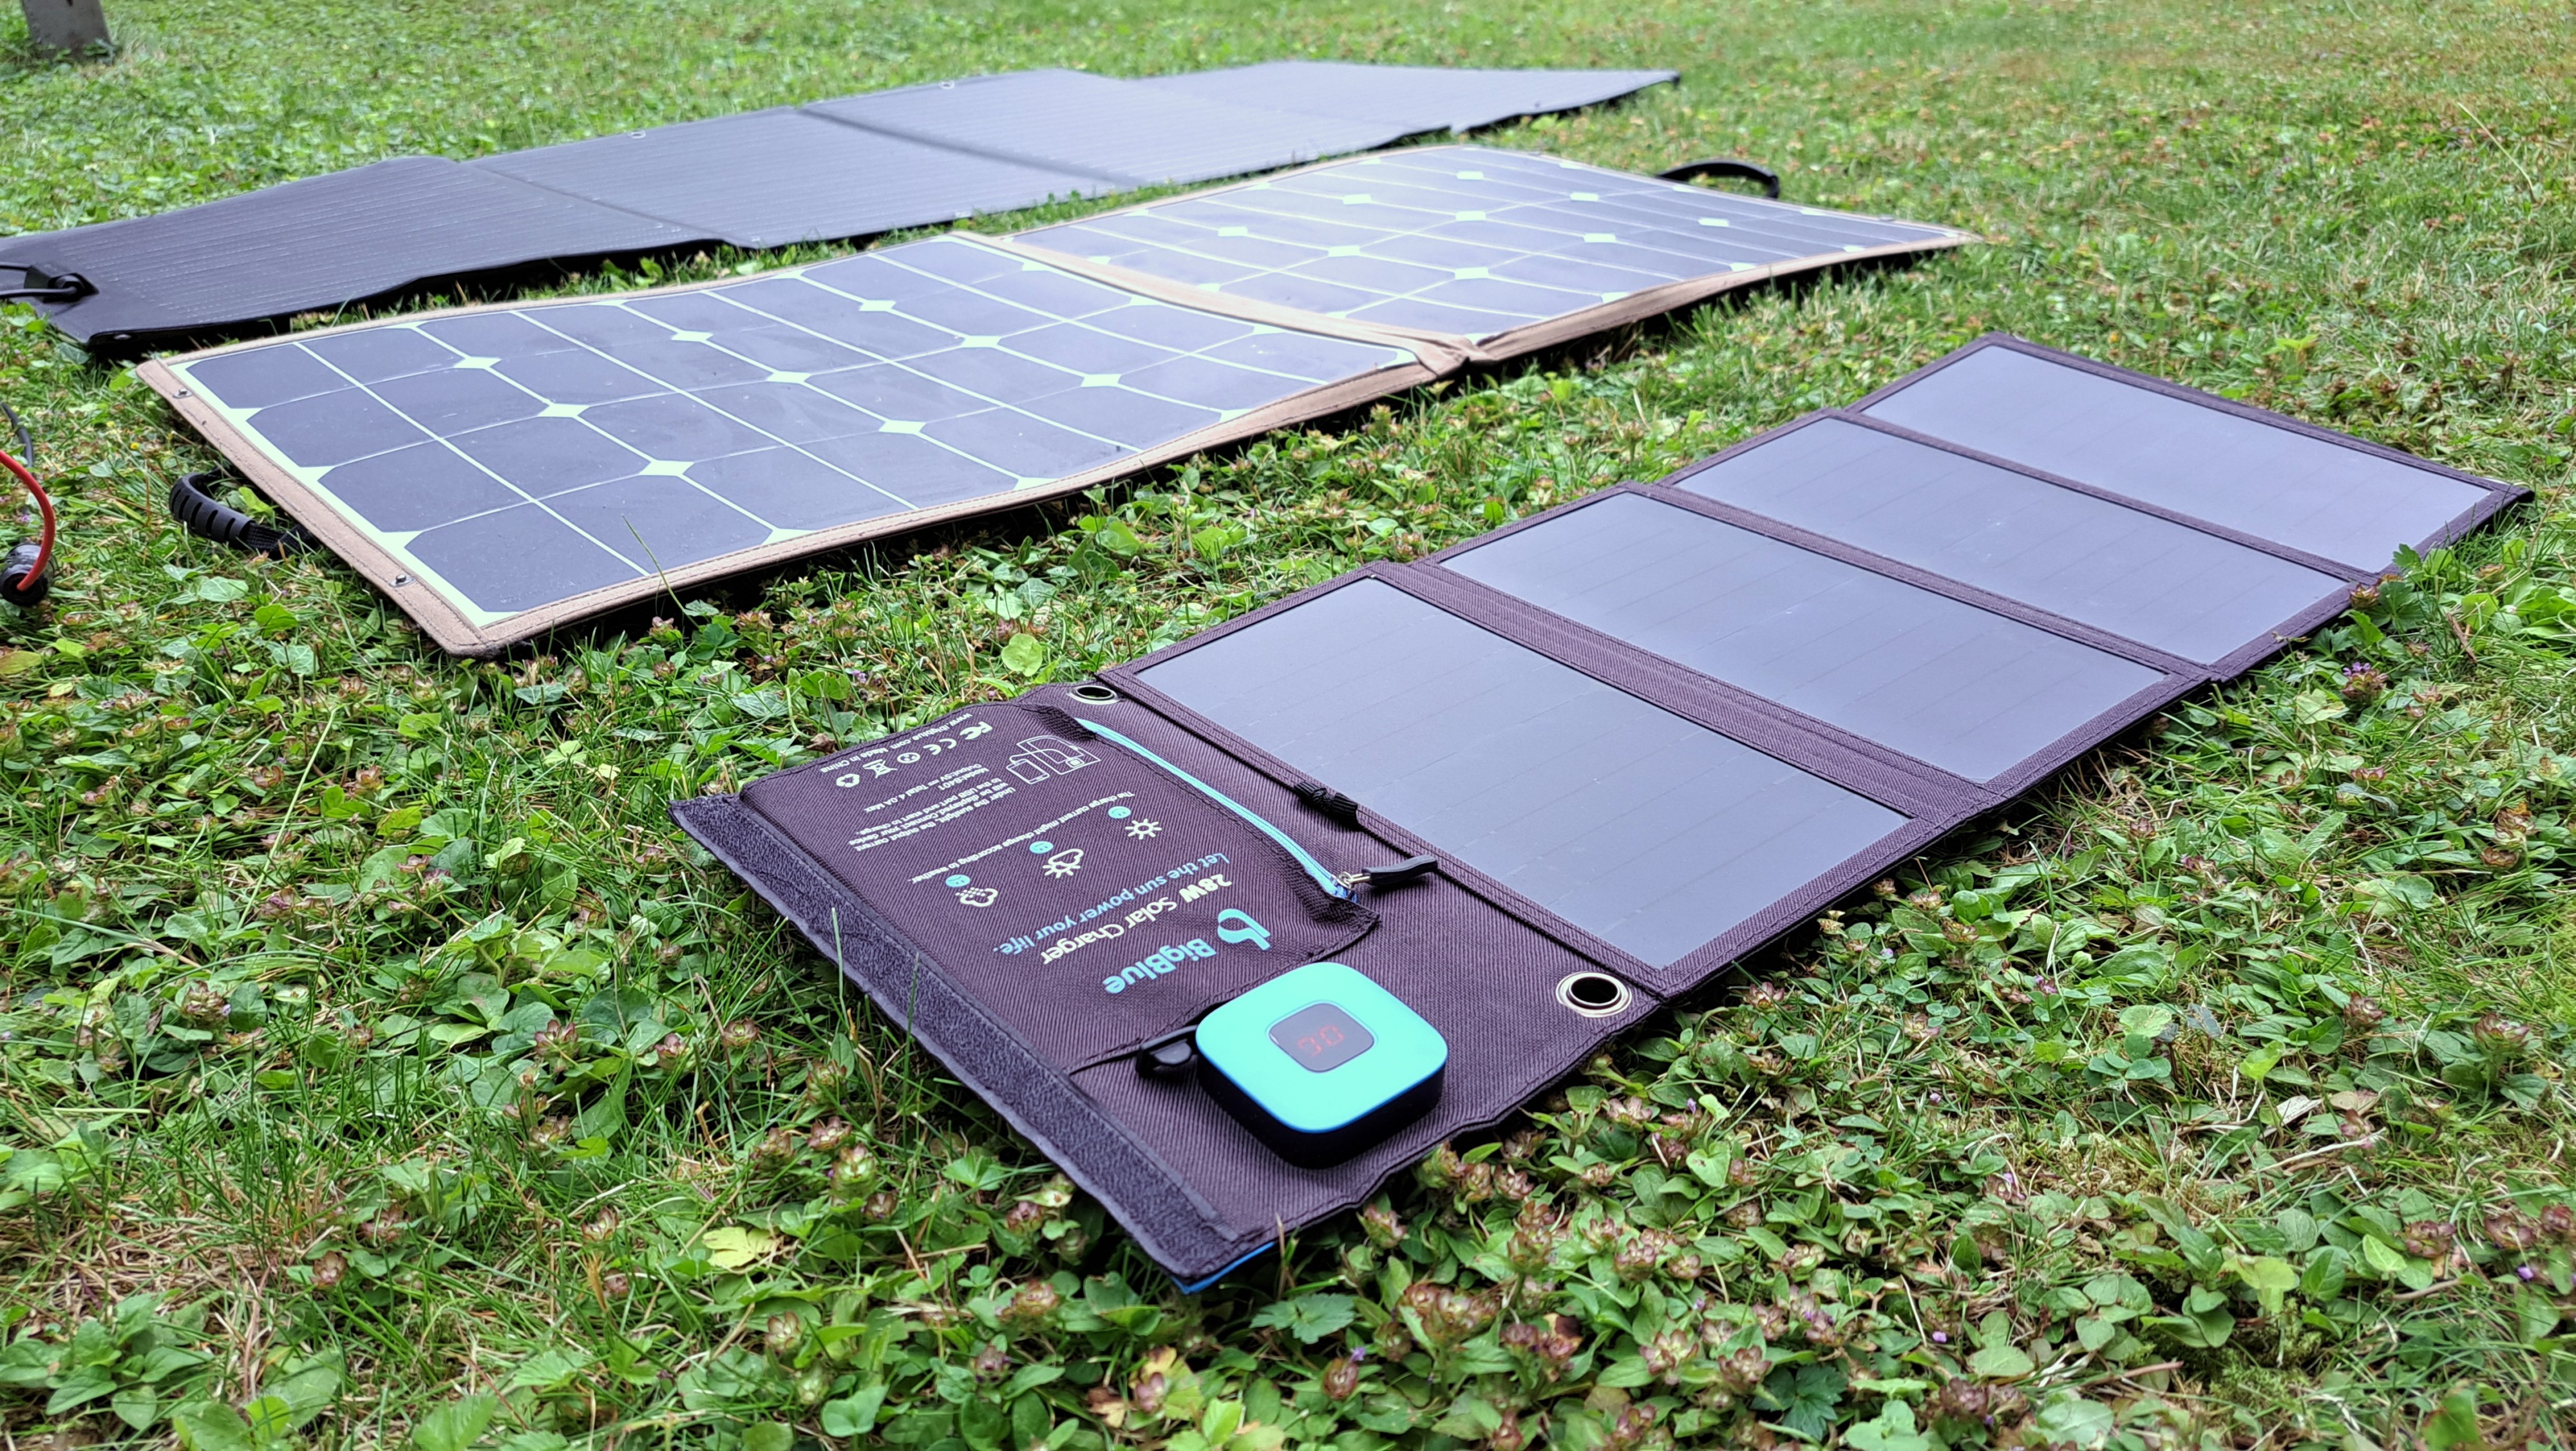 Faltbares Solarmodul 100W mit Laderegler - das mobile Batterie